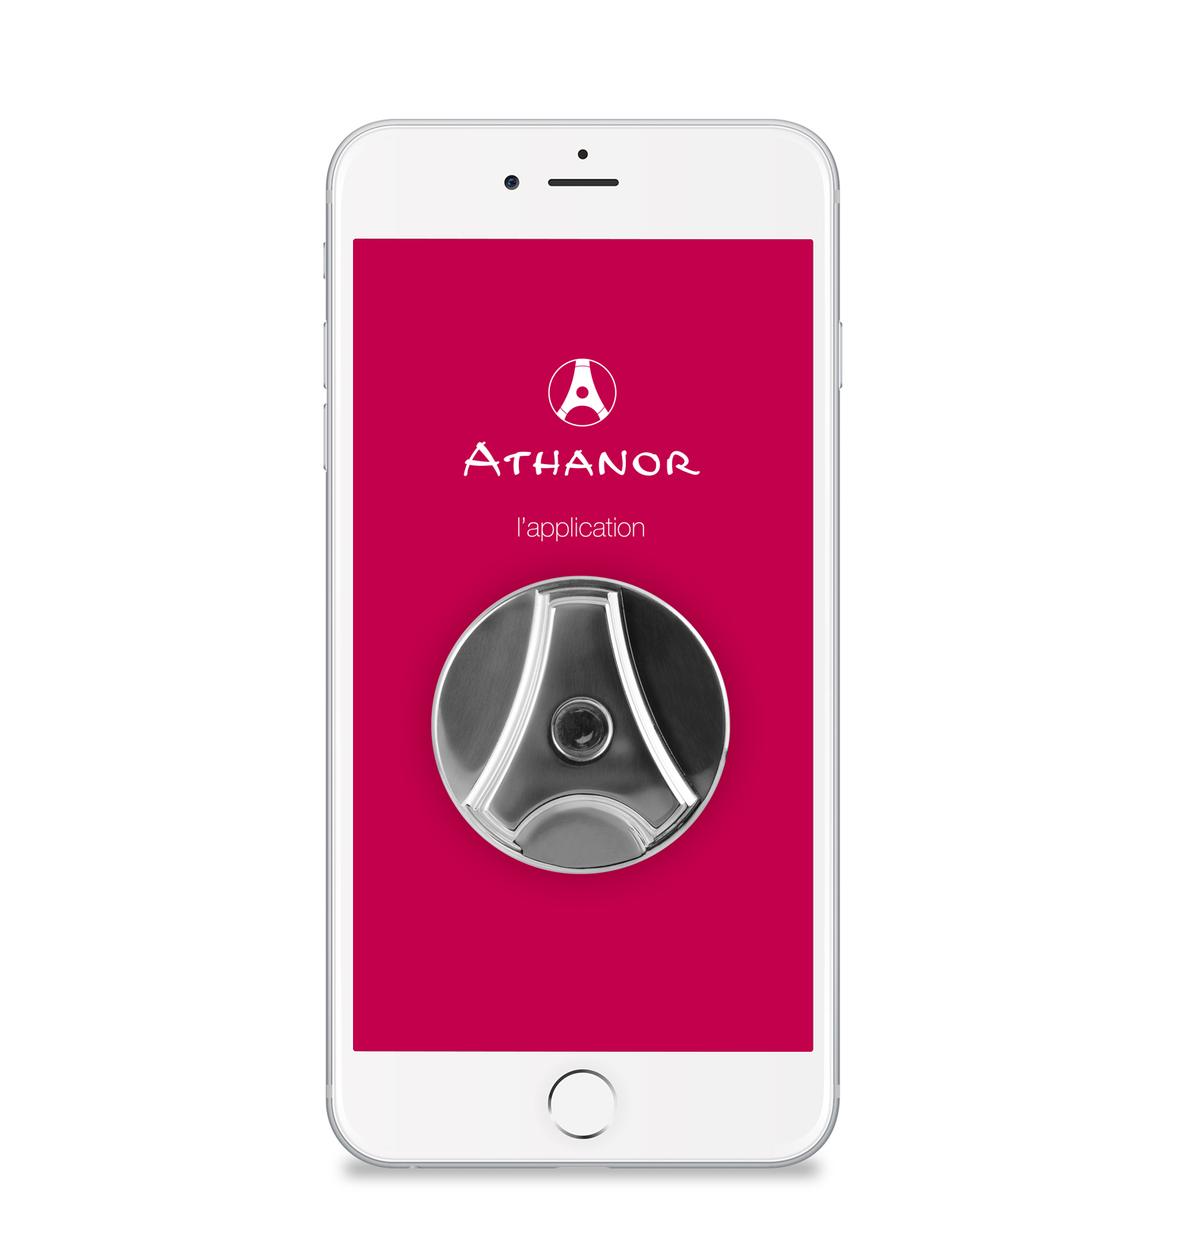 Athanor creates its app